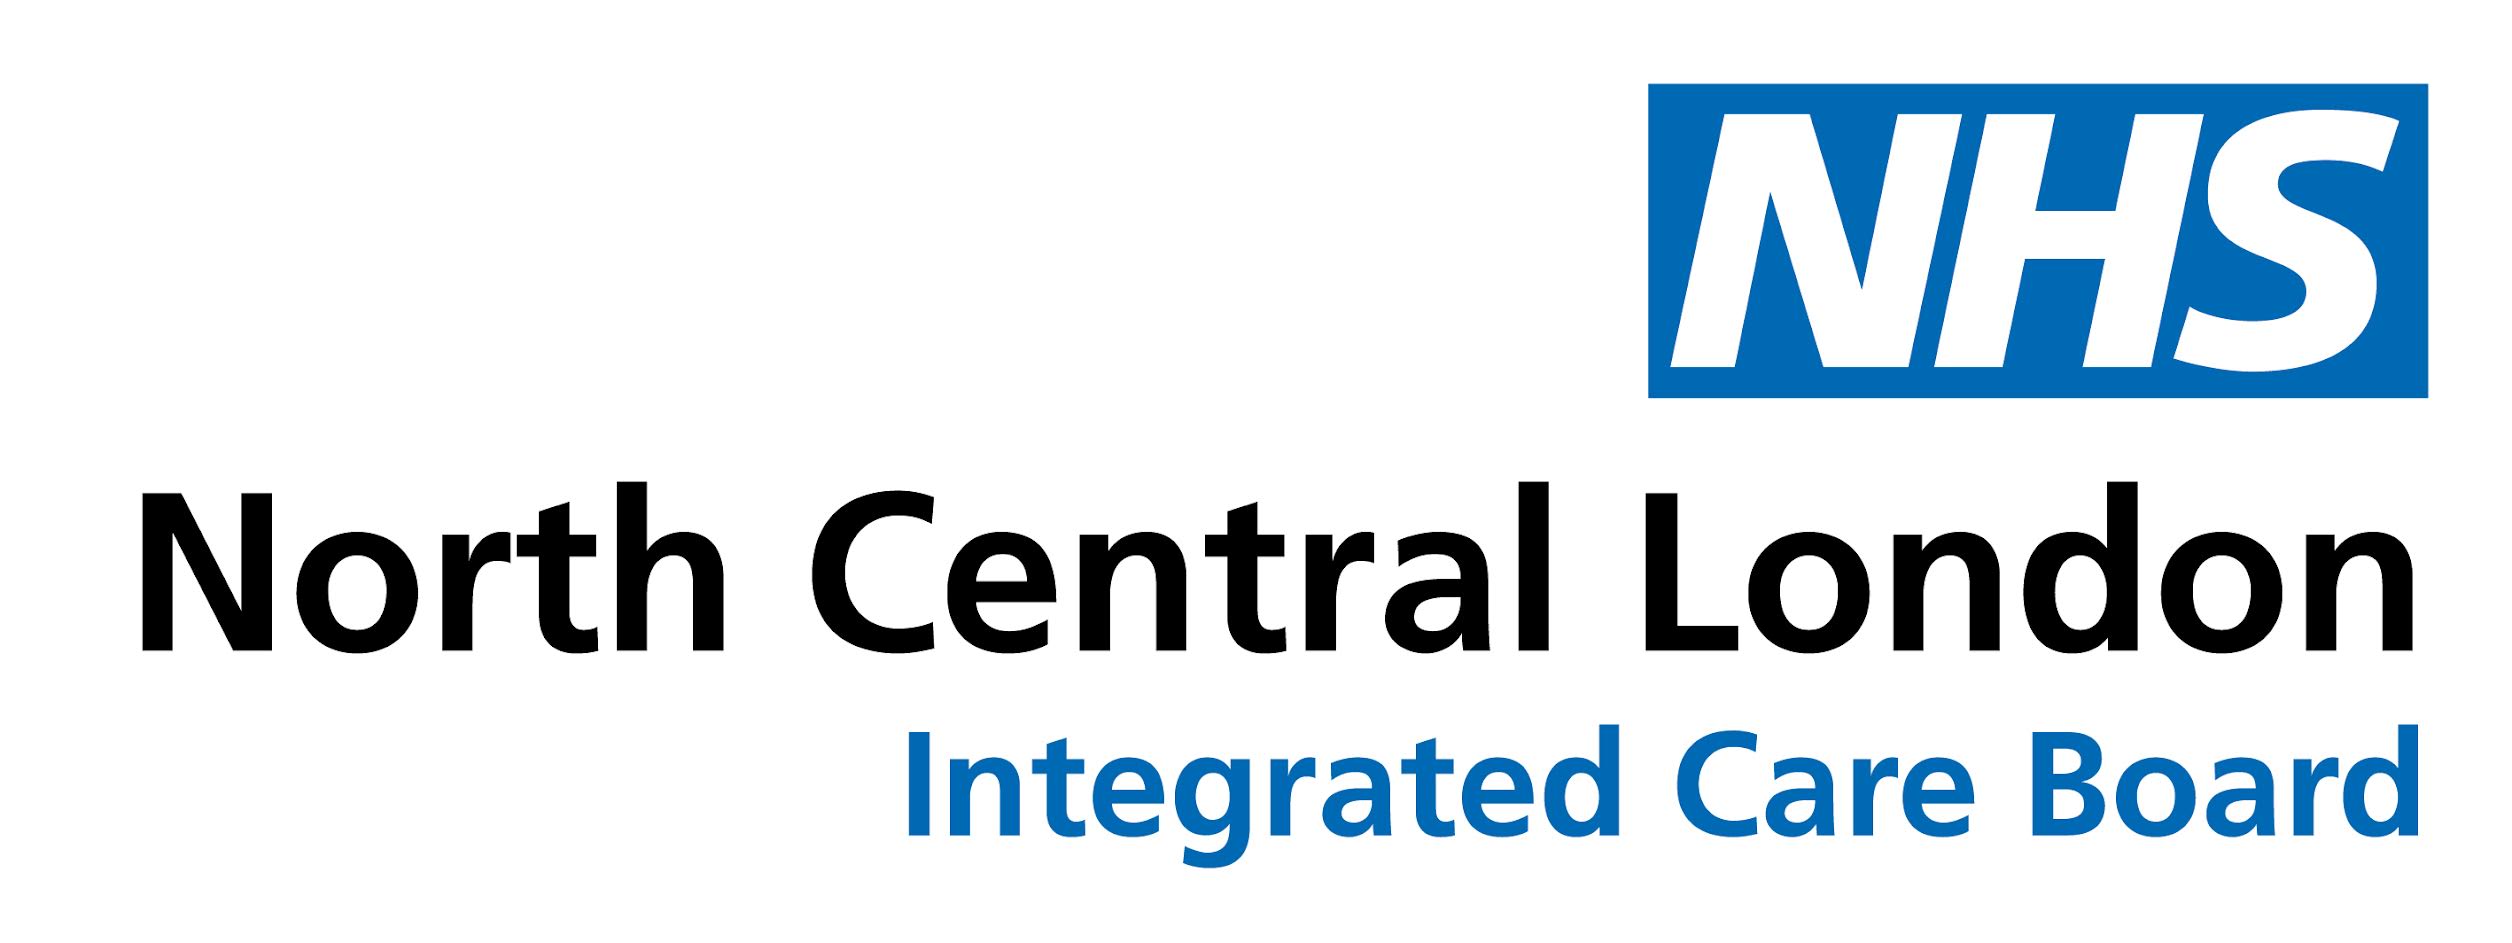 North Central London Integrated Care Board logo